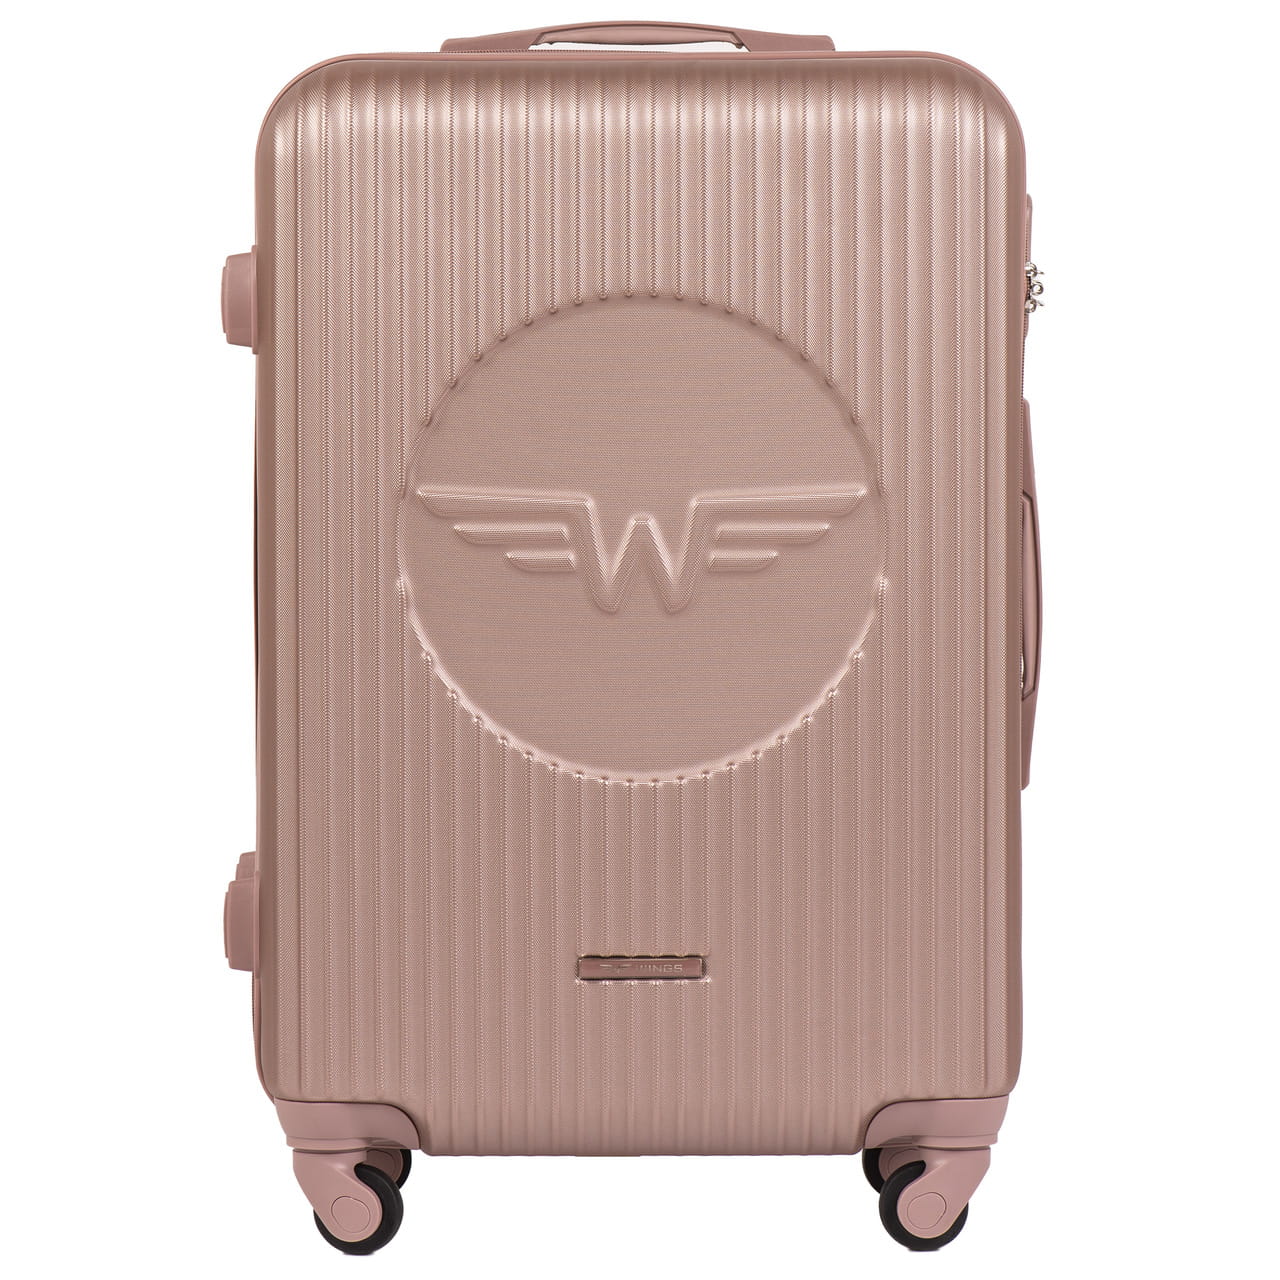 SWL01-rose-gold-keskmine-reisikohver-M-ABS(plastik)-63l-kohvrimaailm-eest